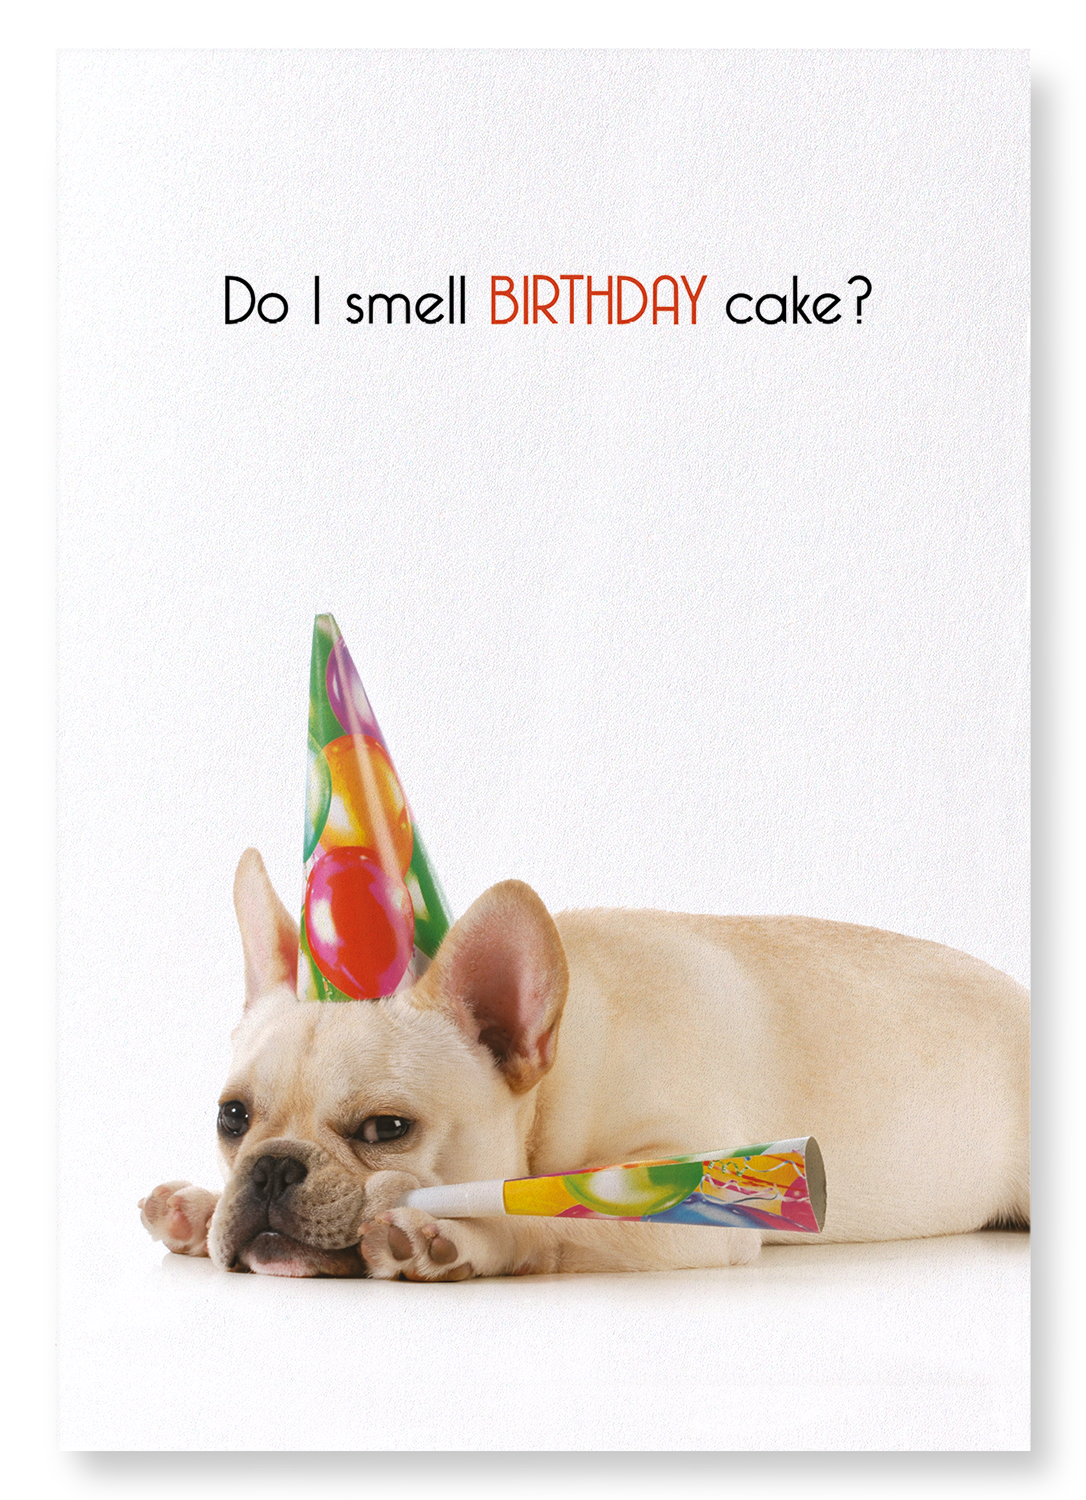 DO I SMELL BIRTHDAY CAKE?